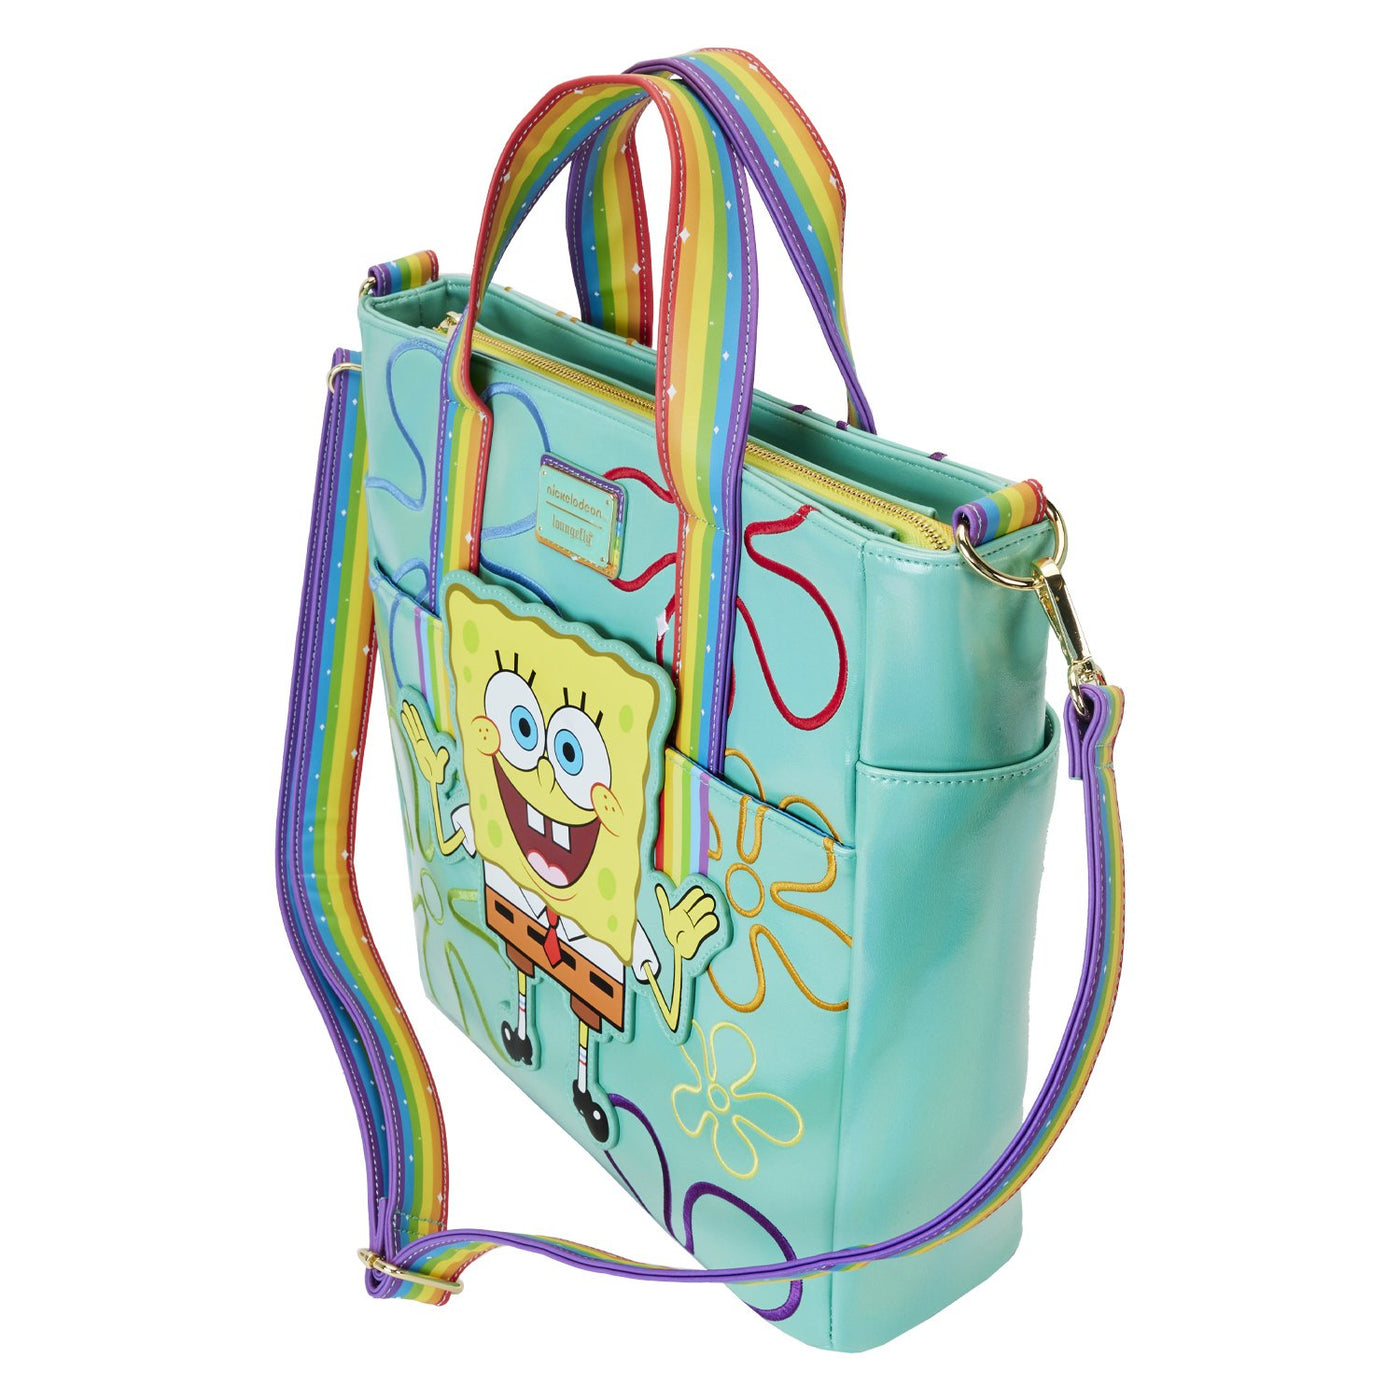 Loungefly Nickelodeon Spongebob Squarepants 25th Anniversary Imagination Convertible Tote Bag - Top View